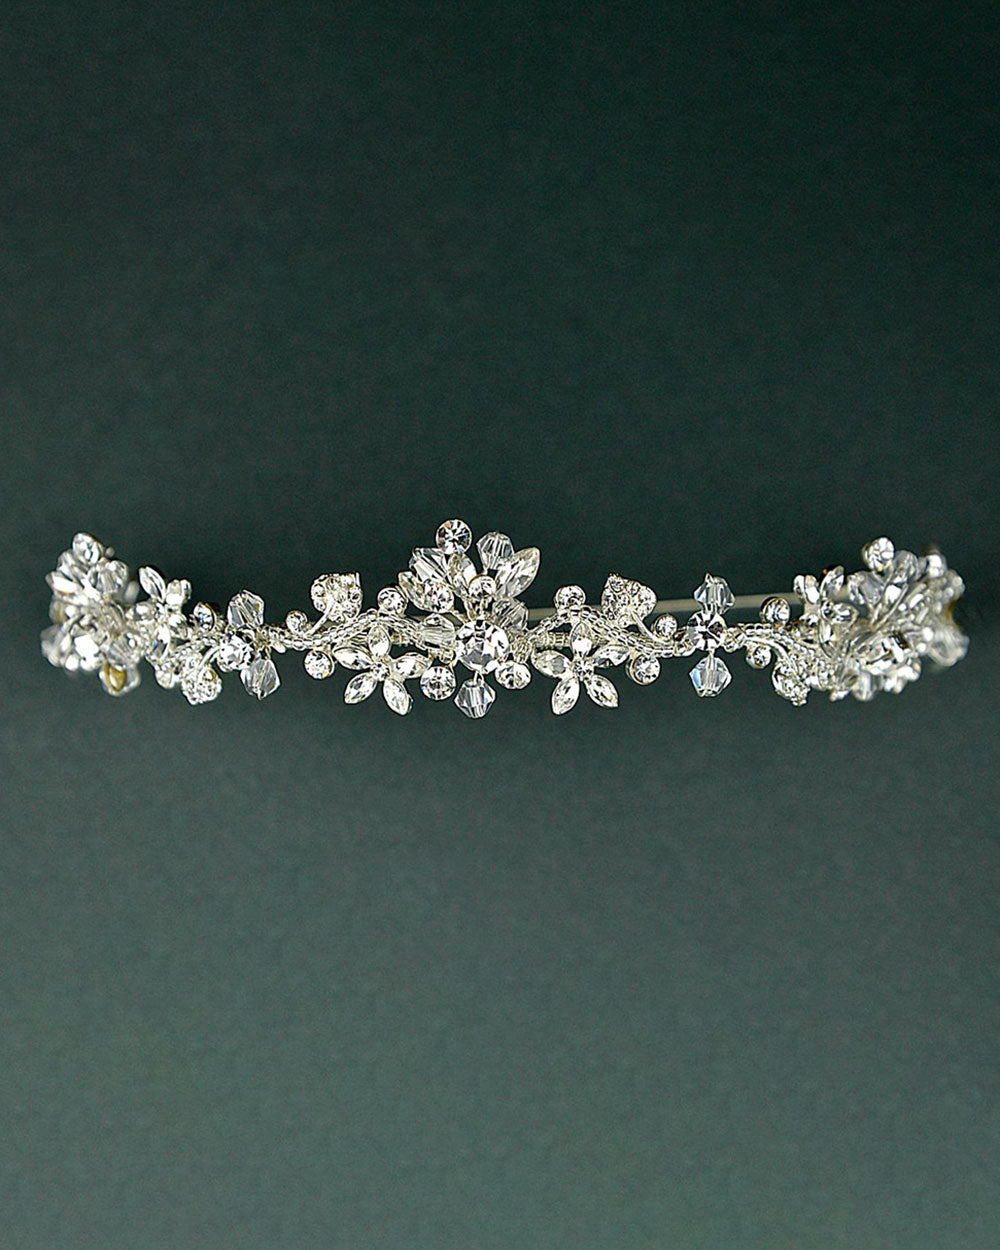 Wedding Headband Entwined Ivy Floral Crystal